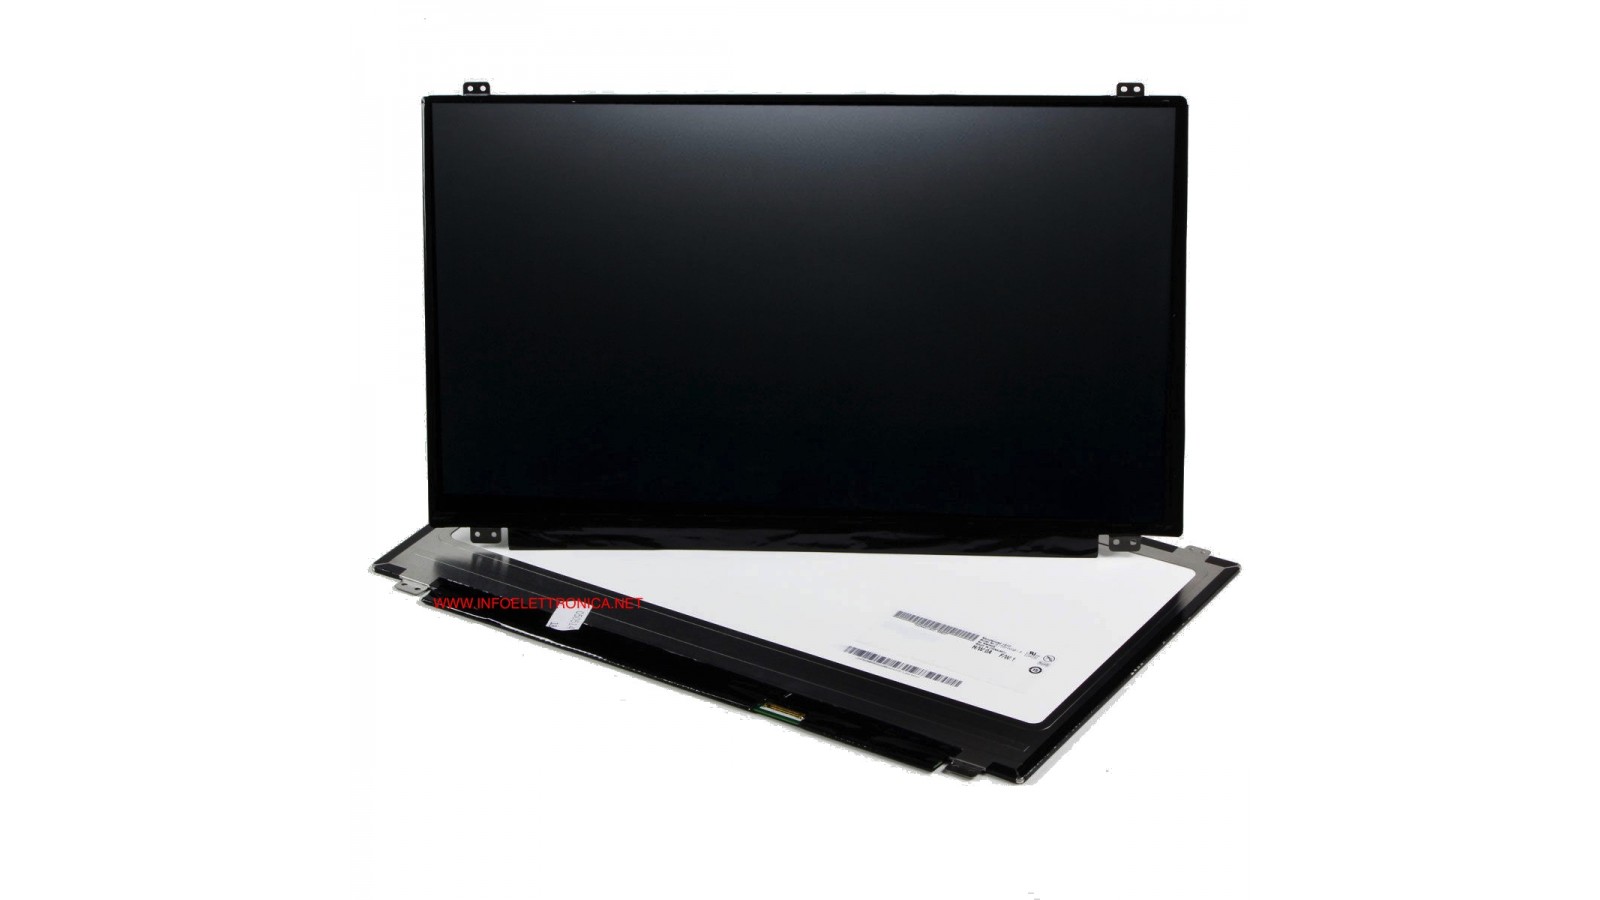 Display LCD Schermo 15,6 Led compatibile con B156HAN04.0 Full Hd